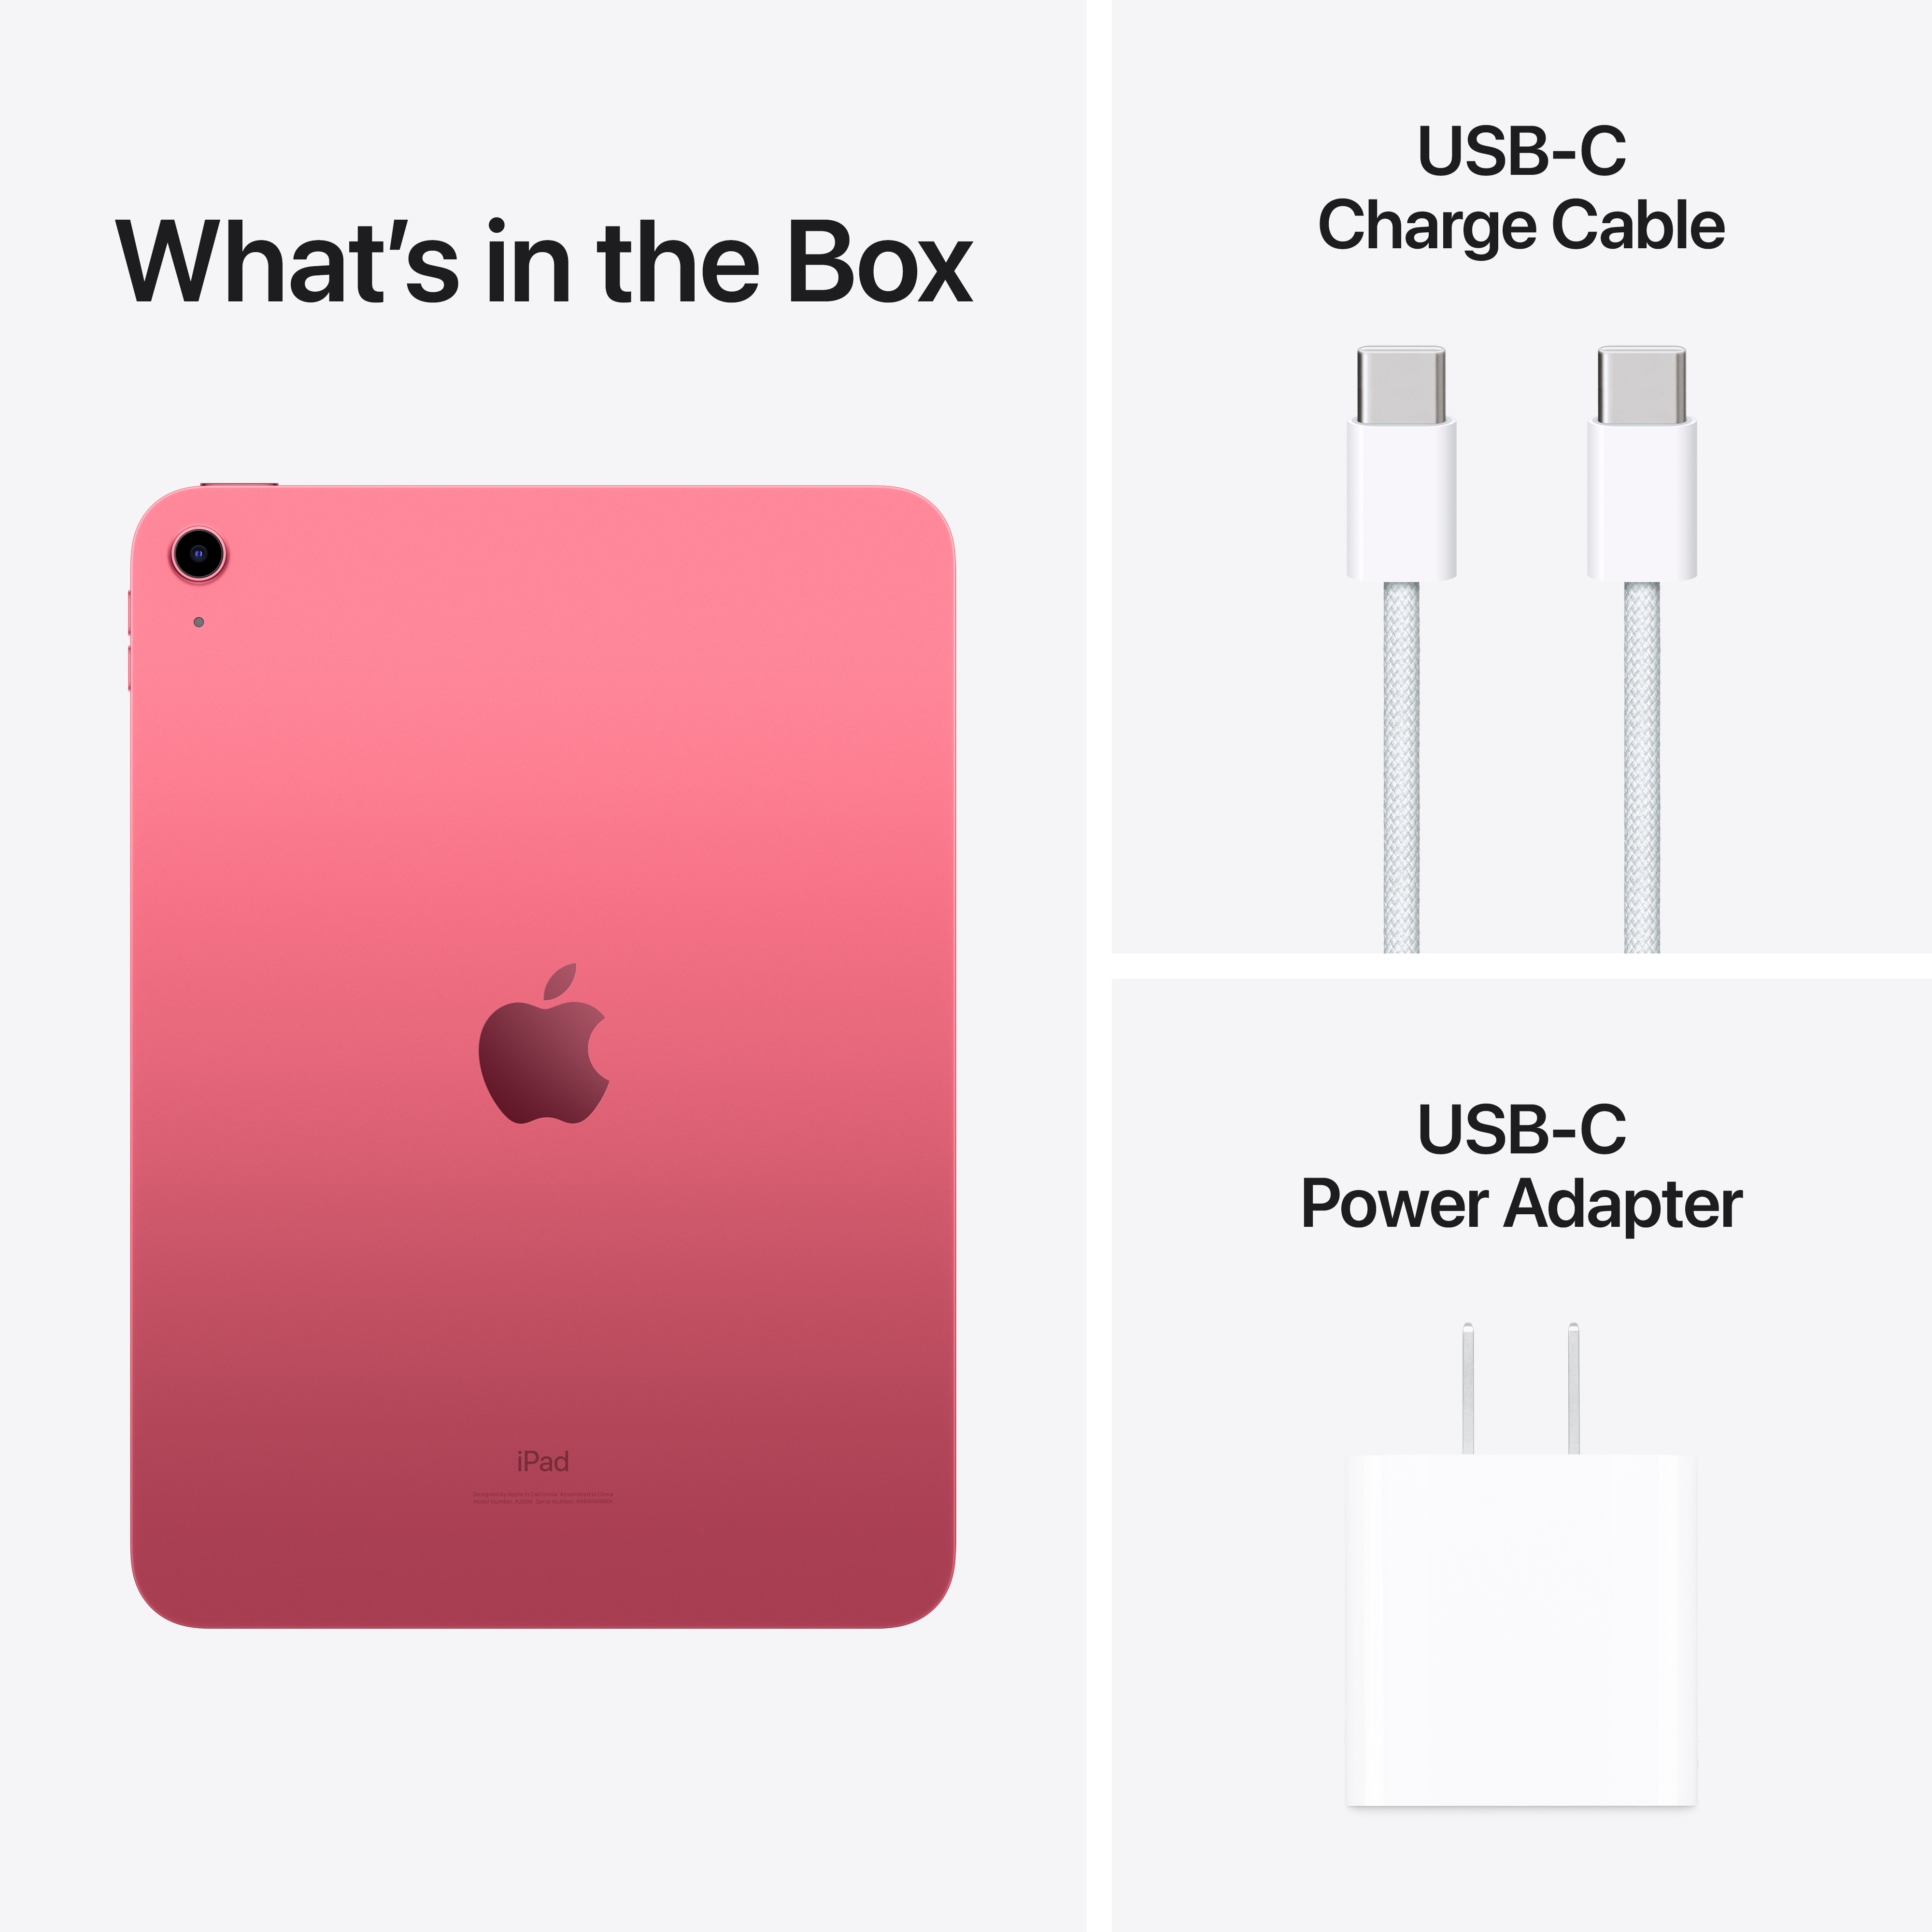 2022 Apple 10.9-inch iPad (Wi-Fi, 256GB) - Pink (10th Generation) - image 3 of 8